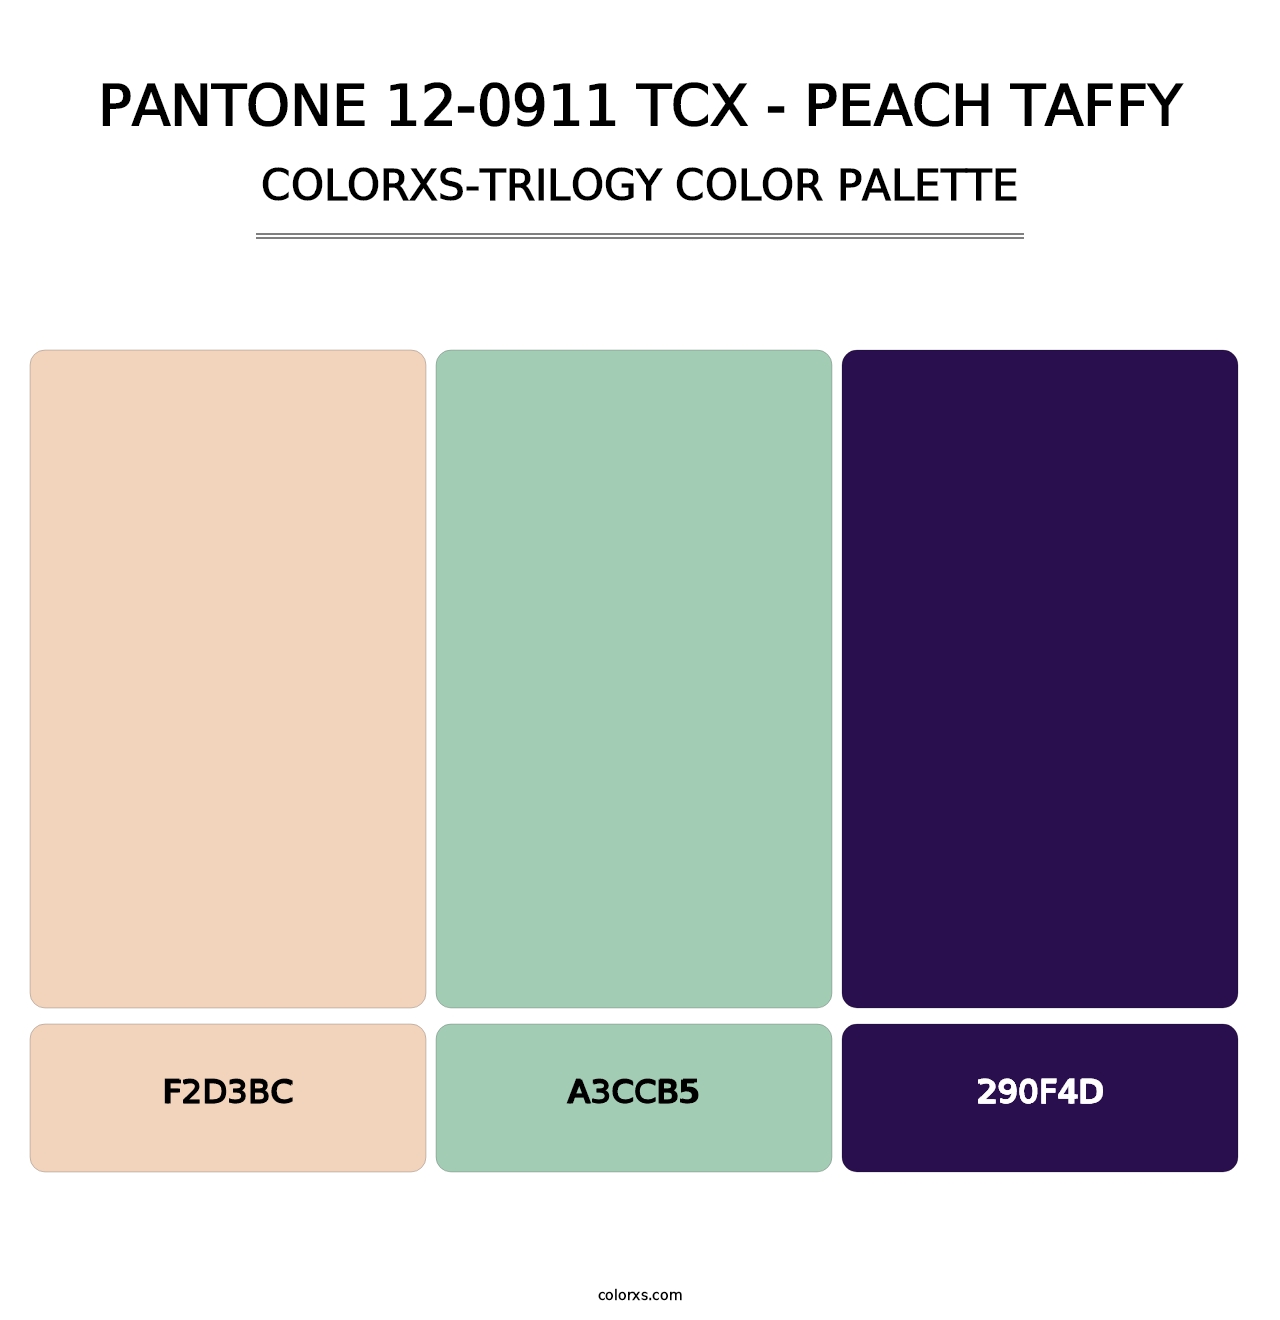 PANTONE 12-0911 TCX - Peach Taffy - Colorxs Trilogy Palette